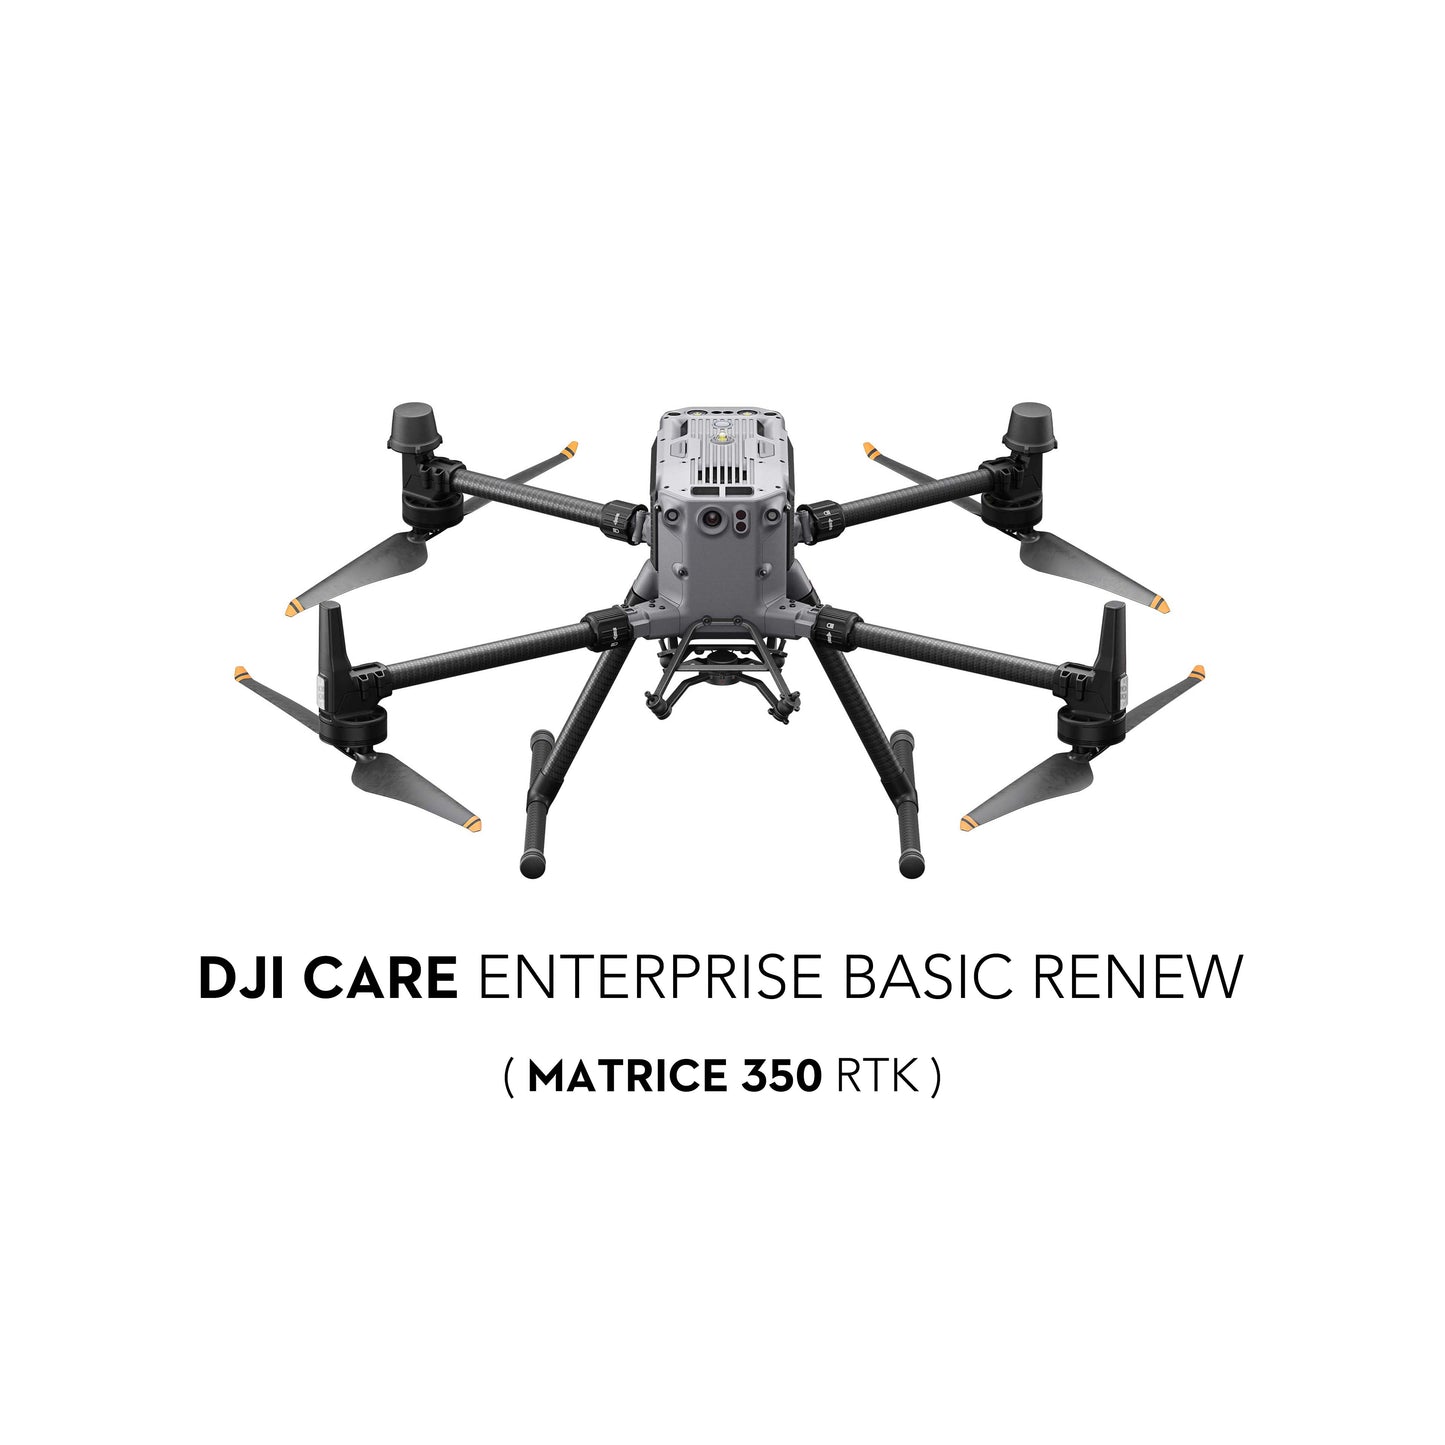 DJI Care Enterprise M350 RTK